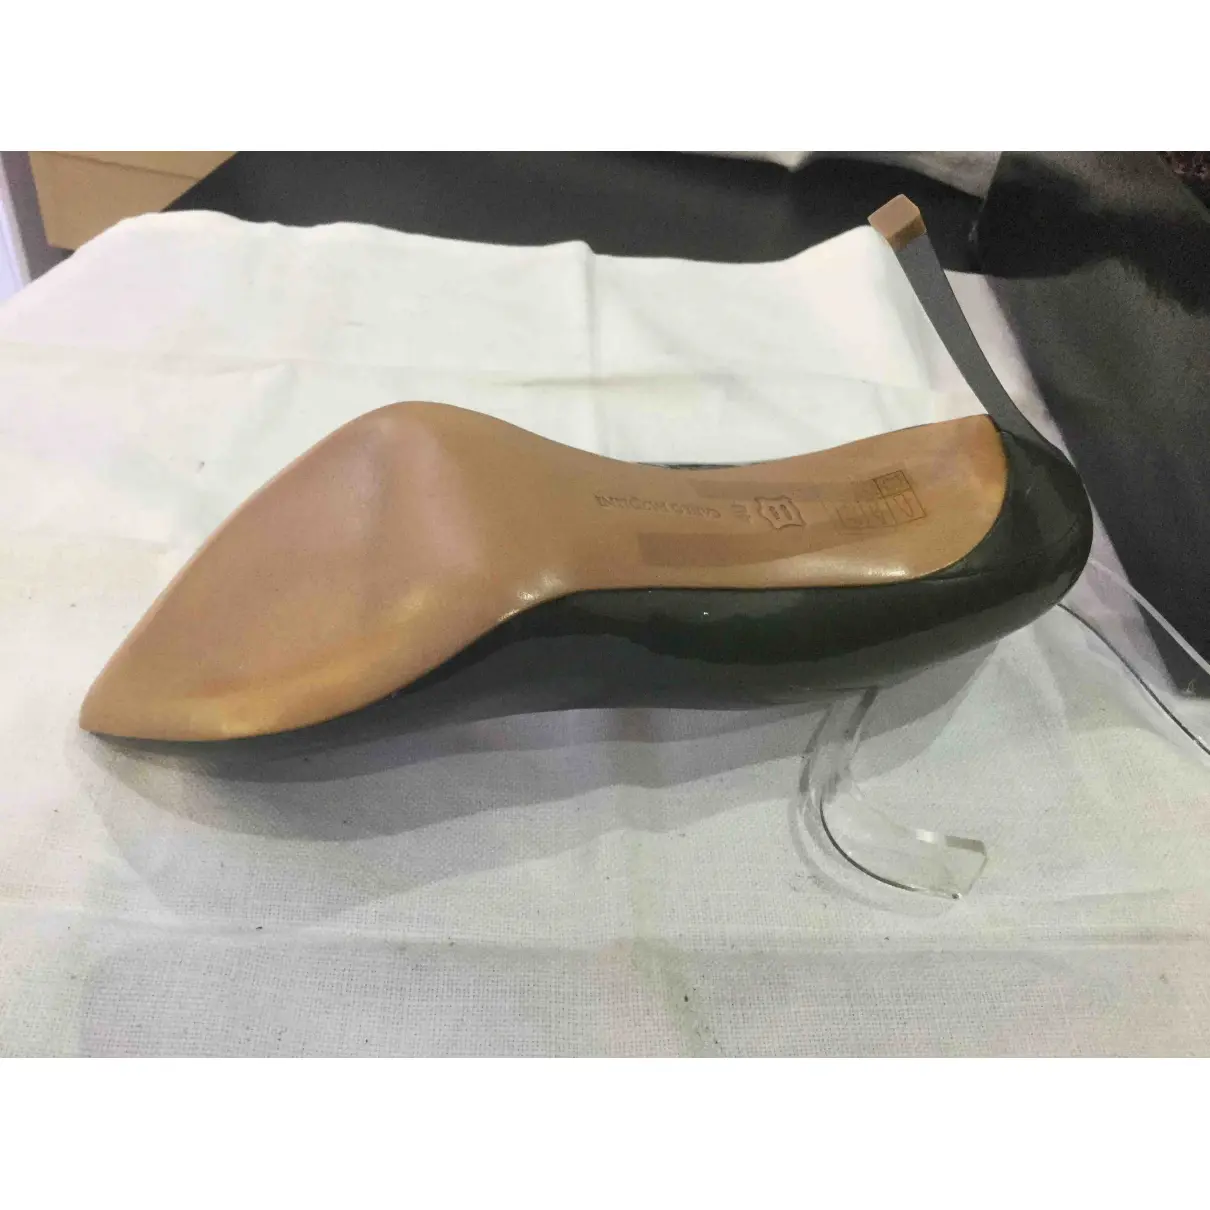 Patent leather heels Carlo Pazolini